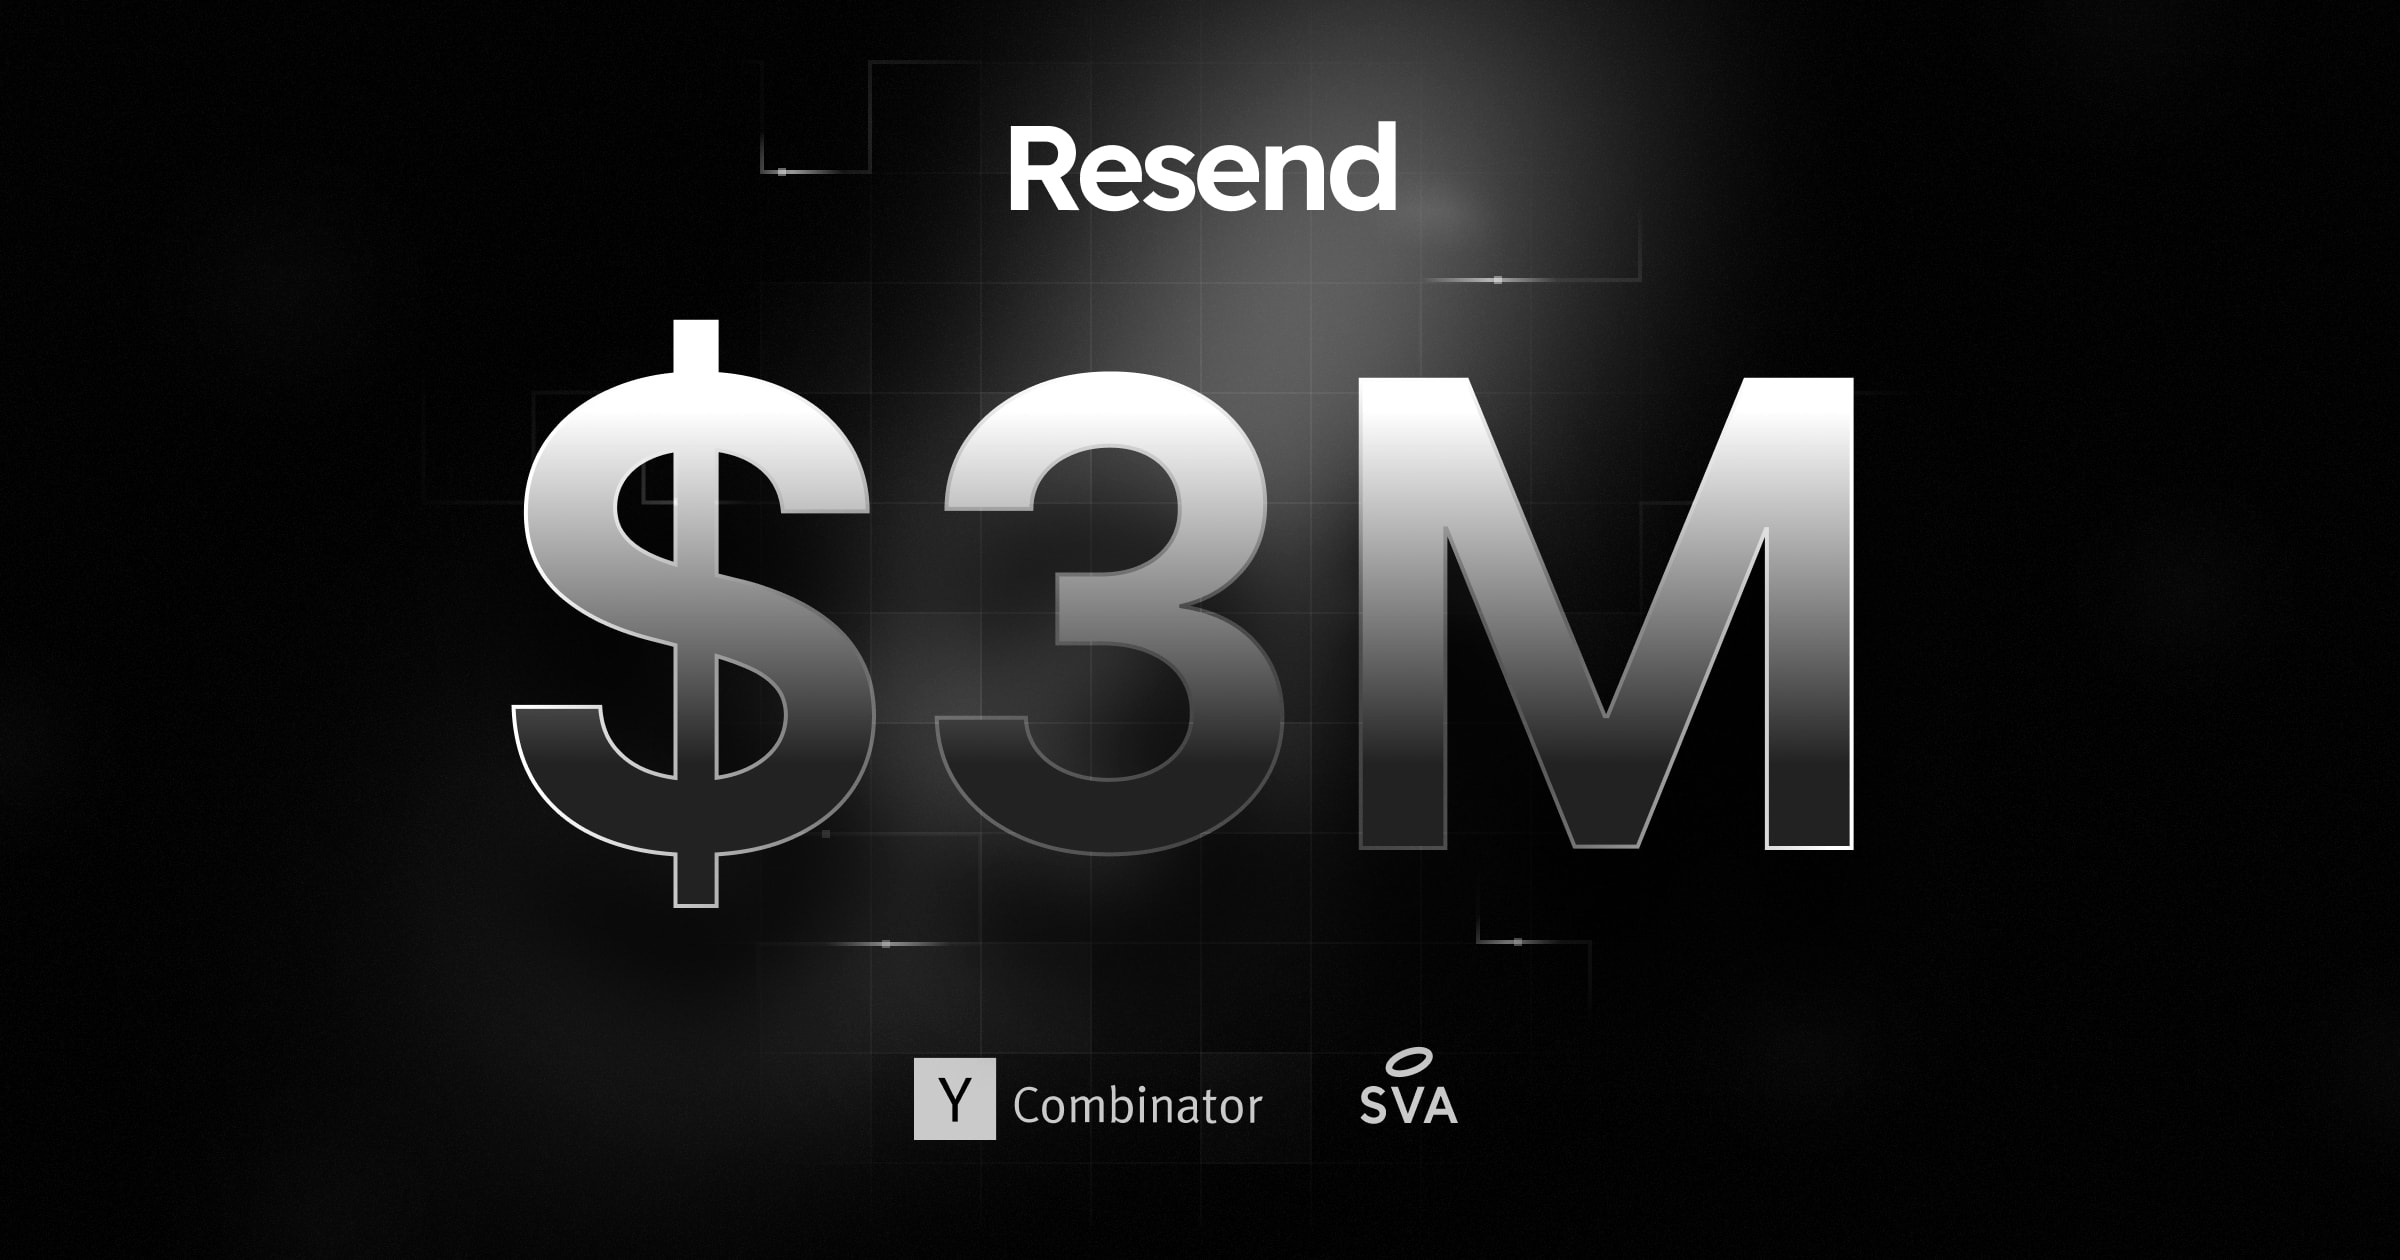 Resend raises $3M · Resend